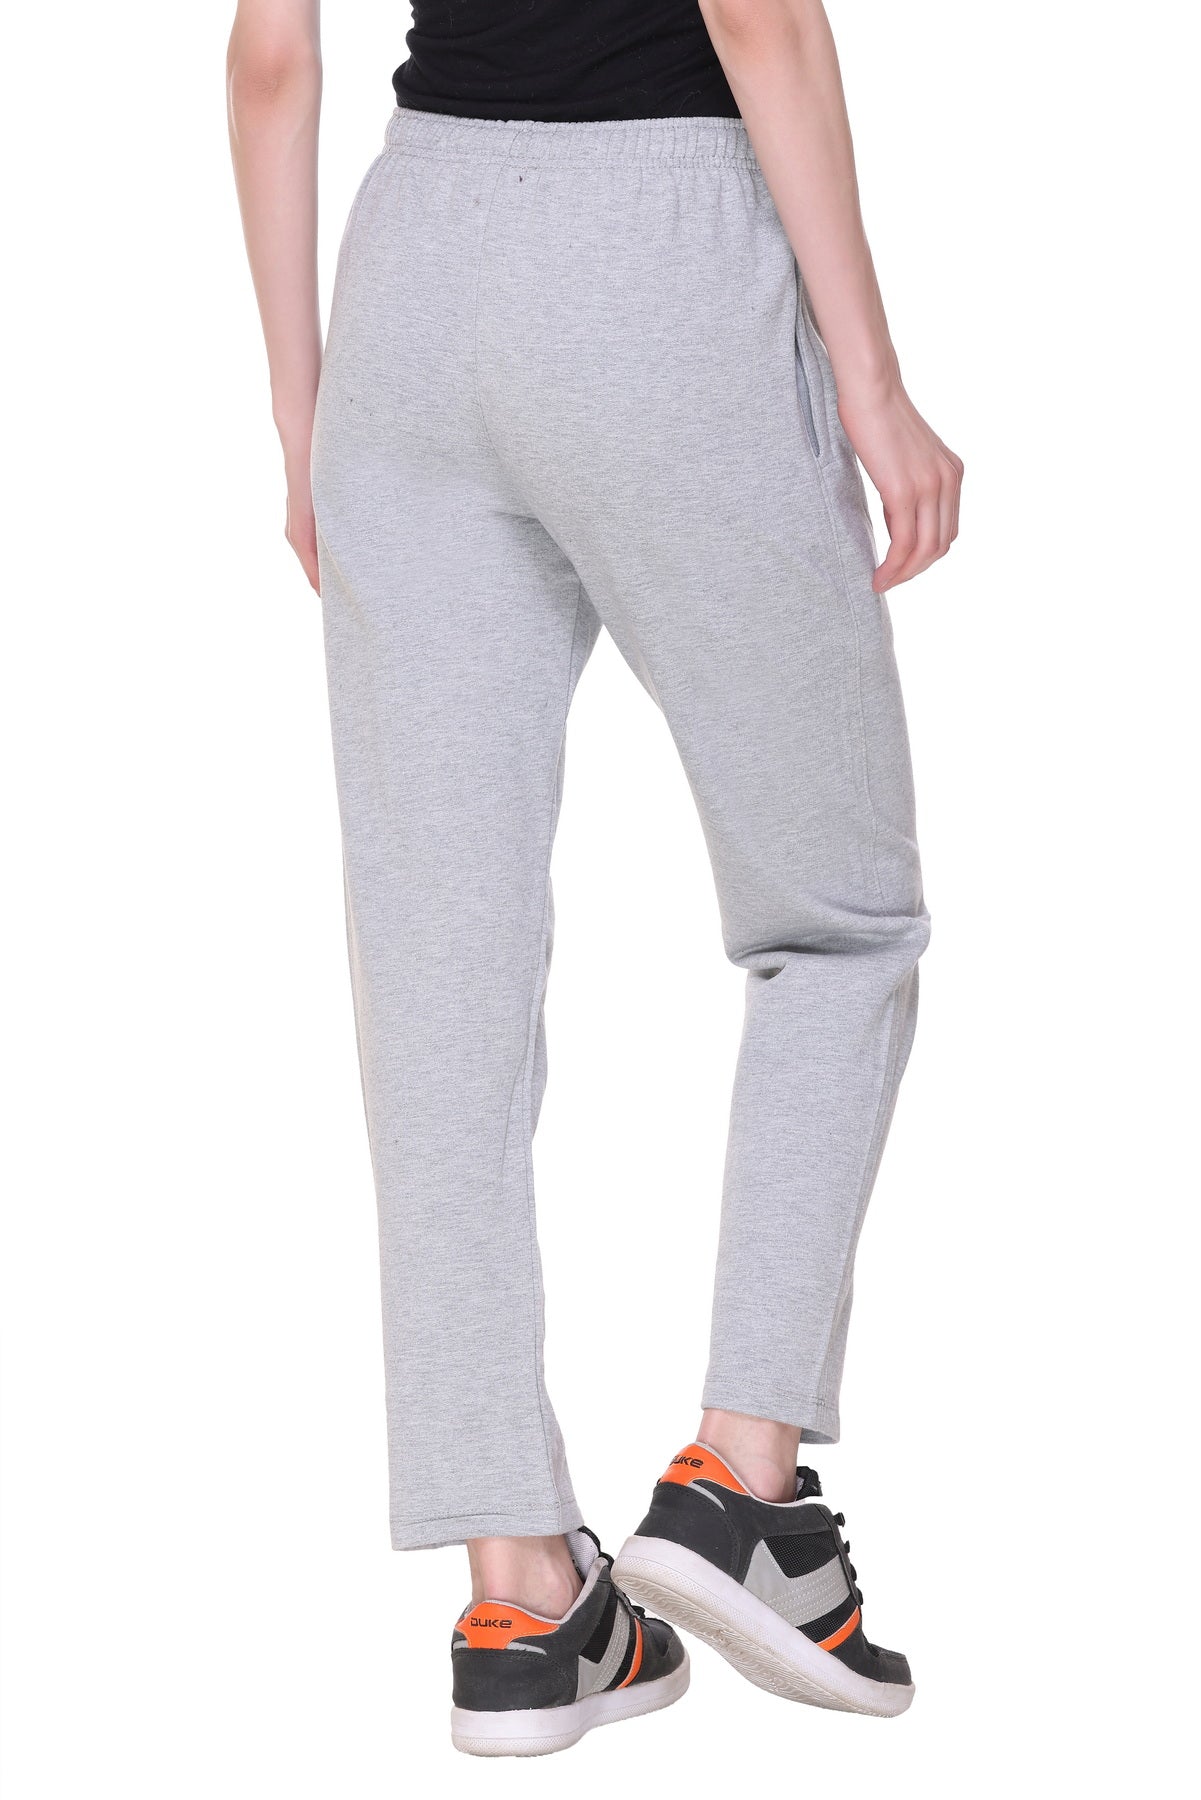 Winter Fleece Track Pants For Women - Grey